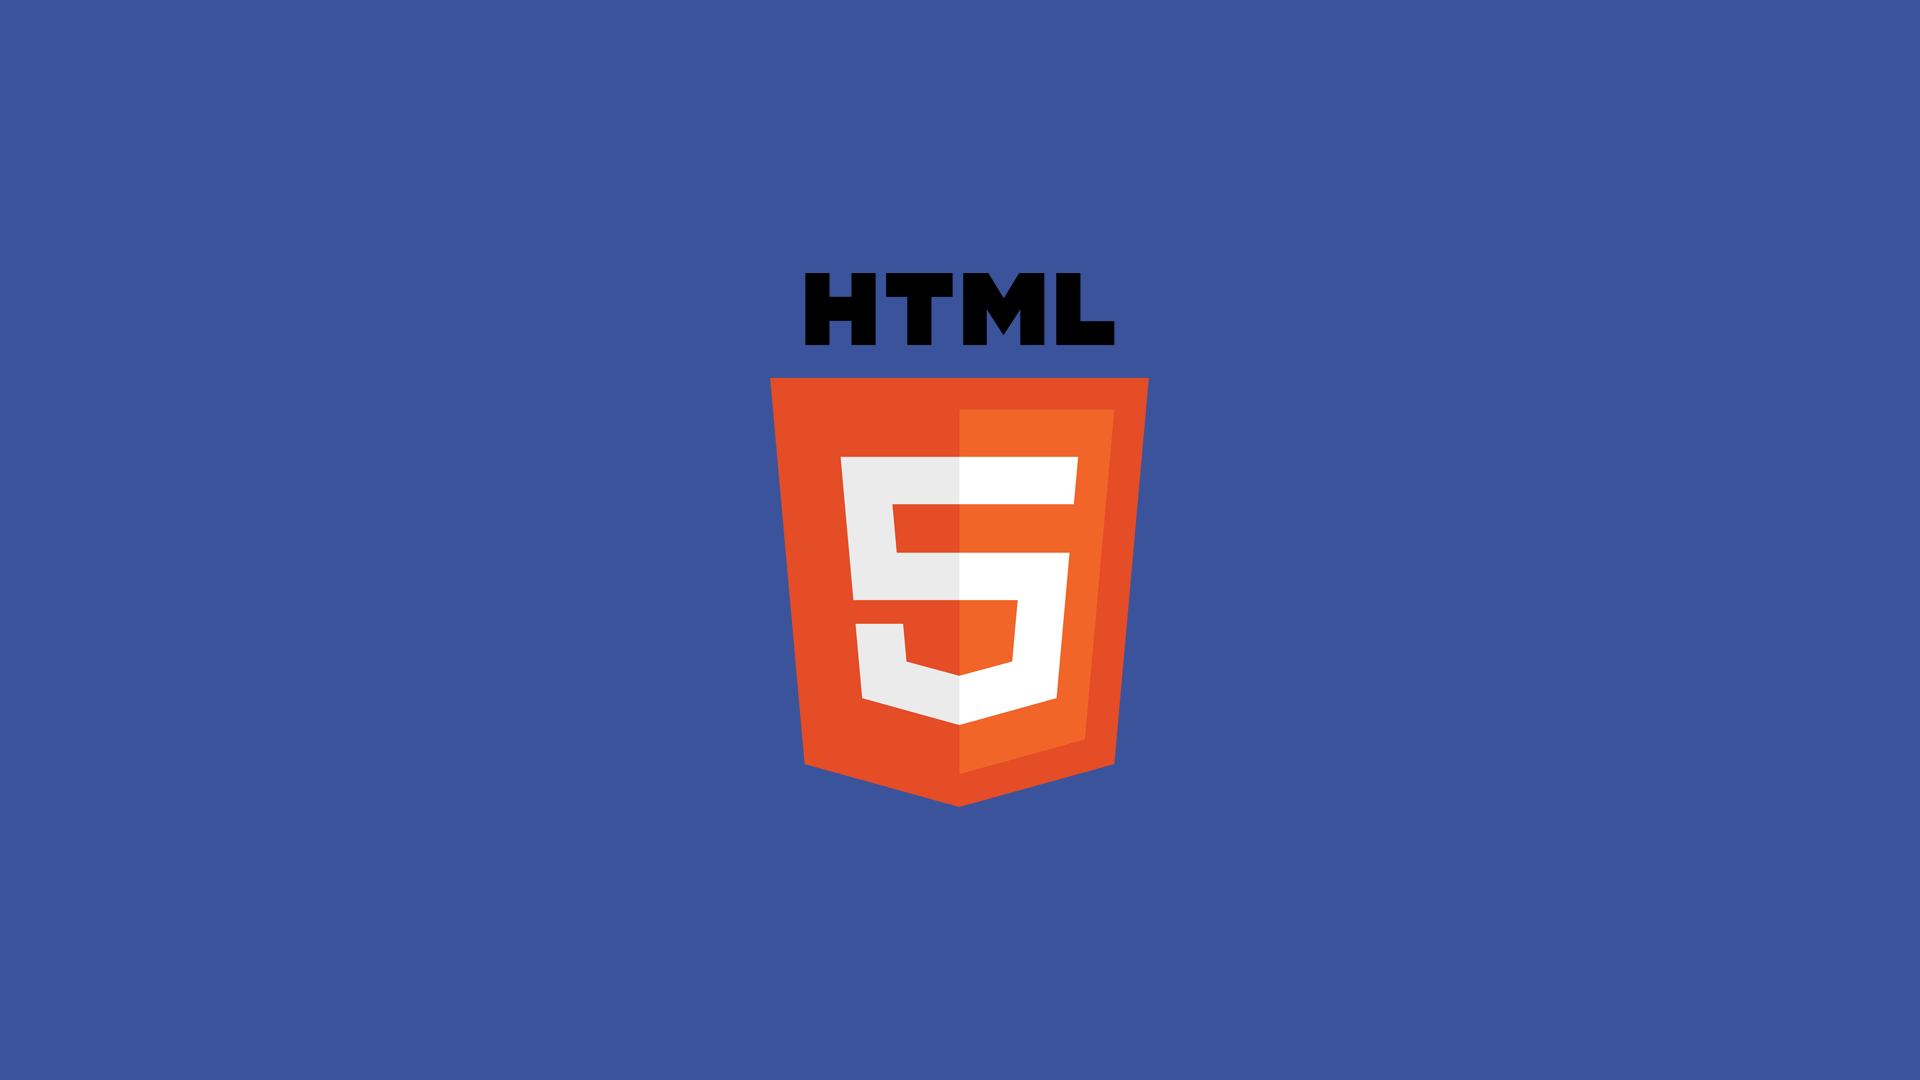 Html5 streaming. Изображение в html. Html5 лого. Значок html5. Логотип html CSS.